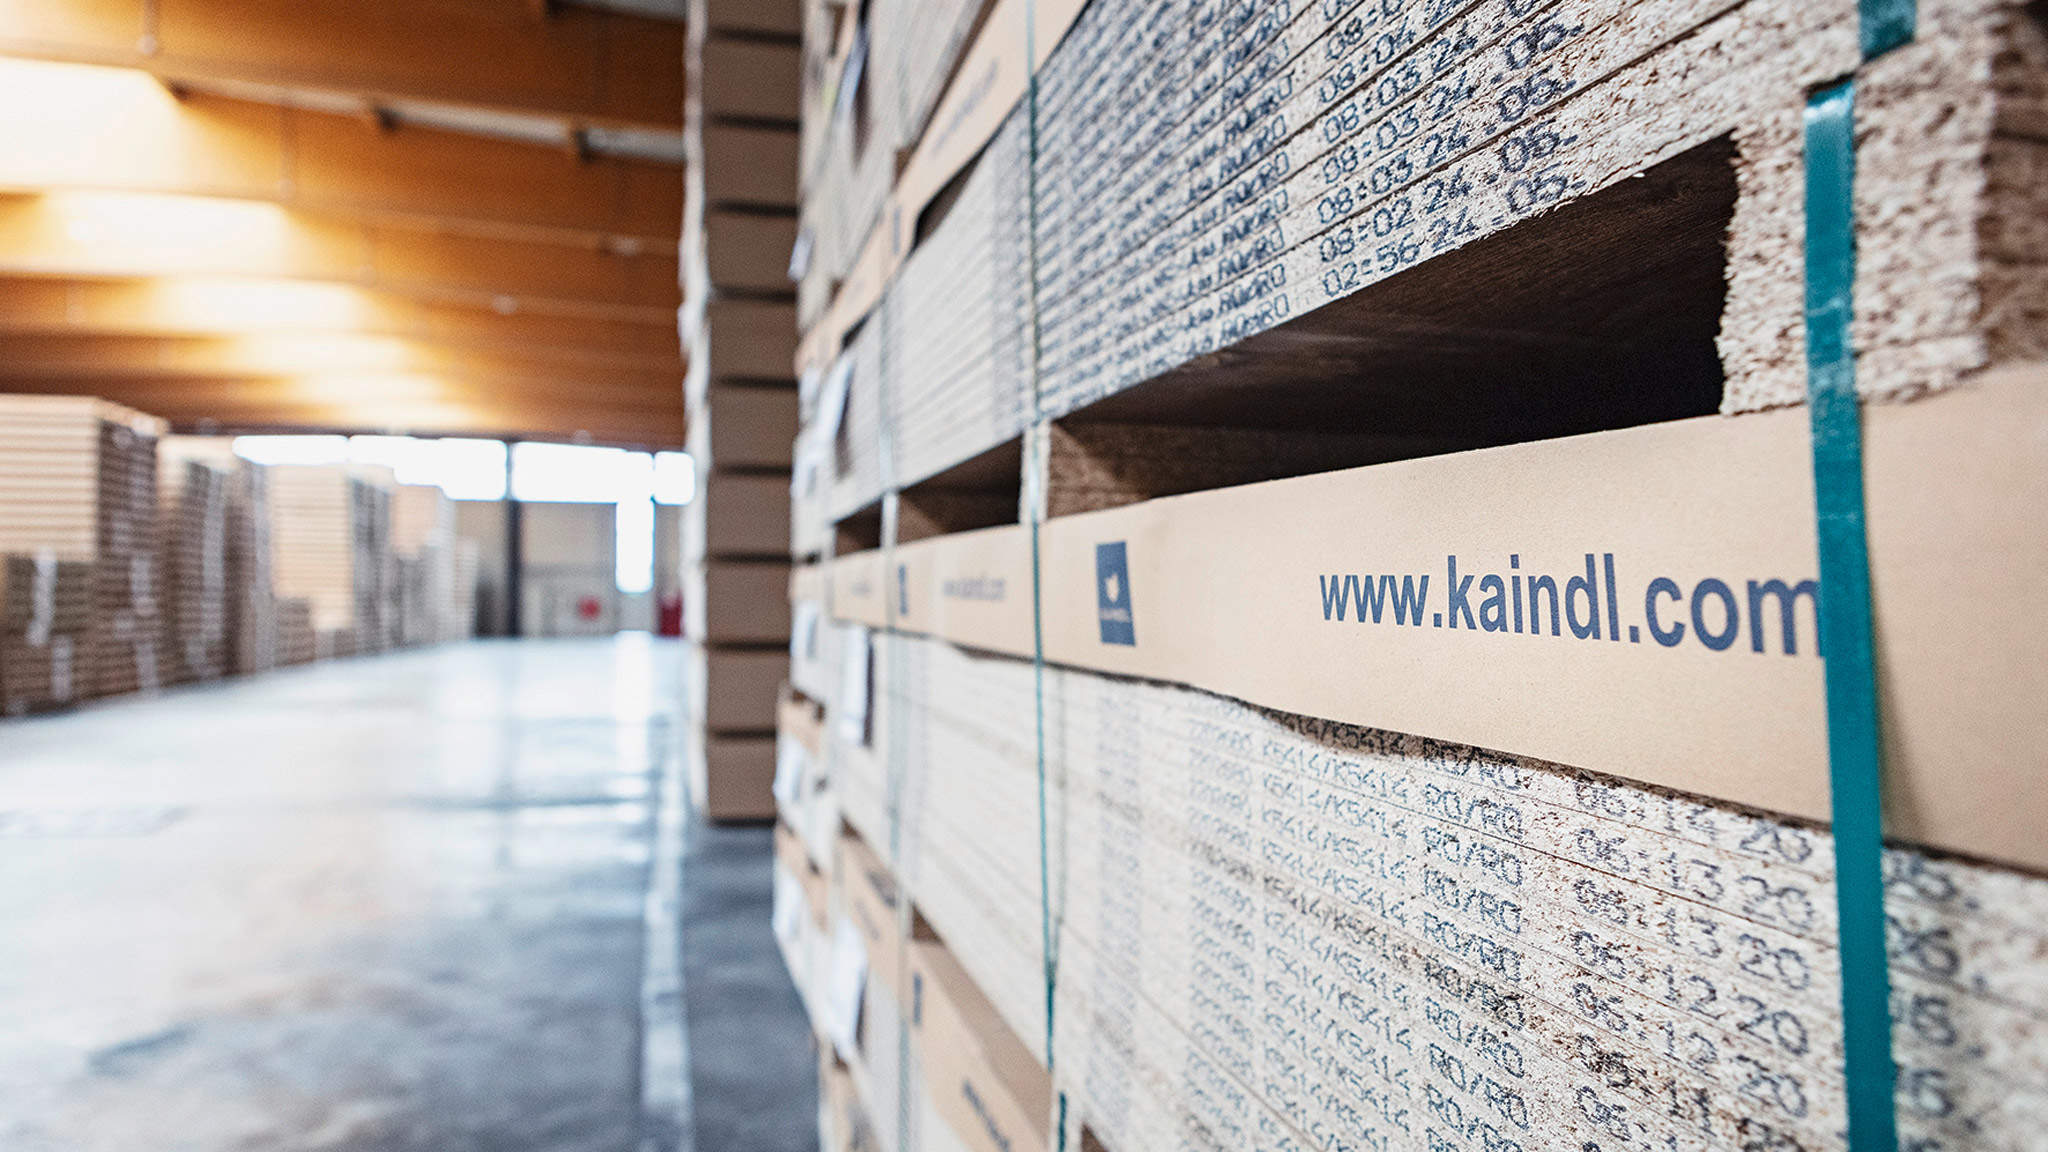 Logistieke hotspot: De Kaindl-megastore in Wals.